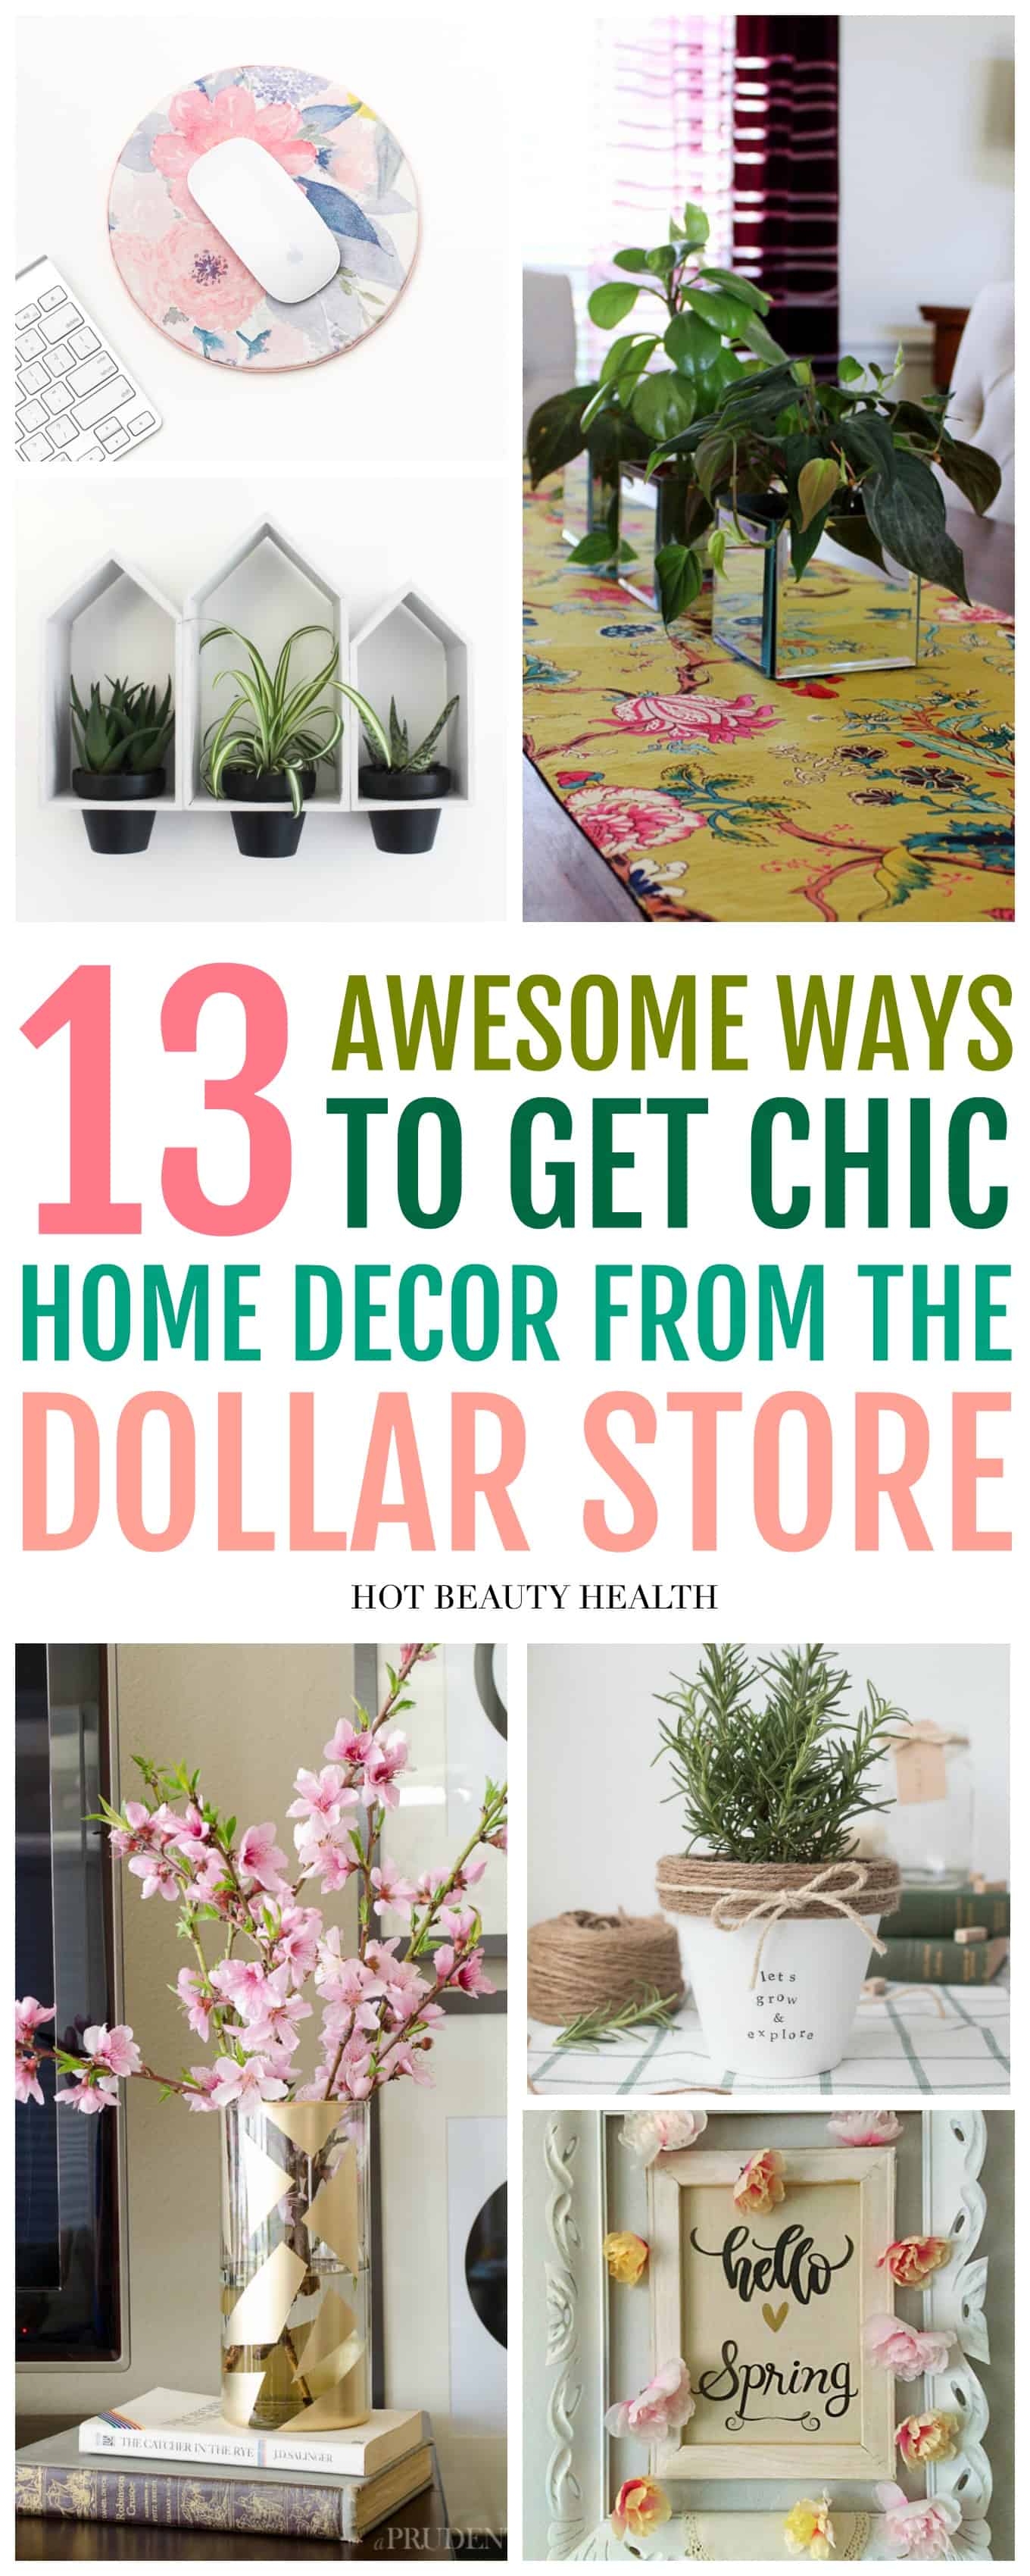 13 Dollar Store Home Decor Ideas You'll Love - Hot Beauty Health